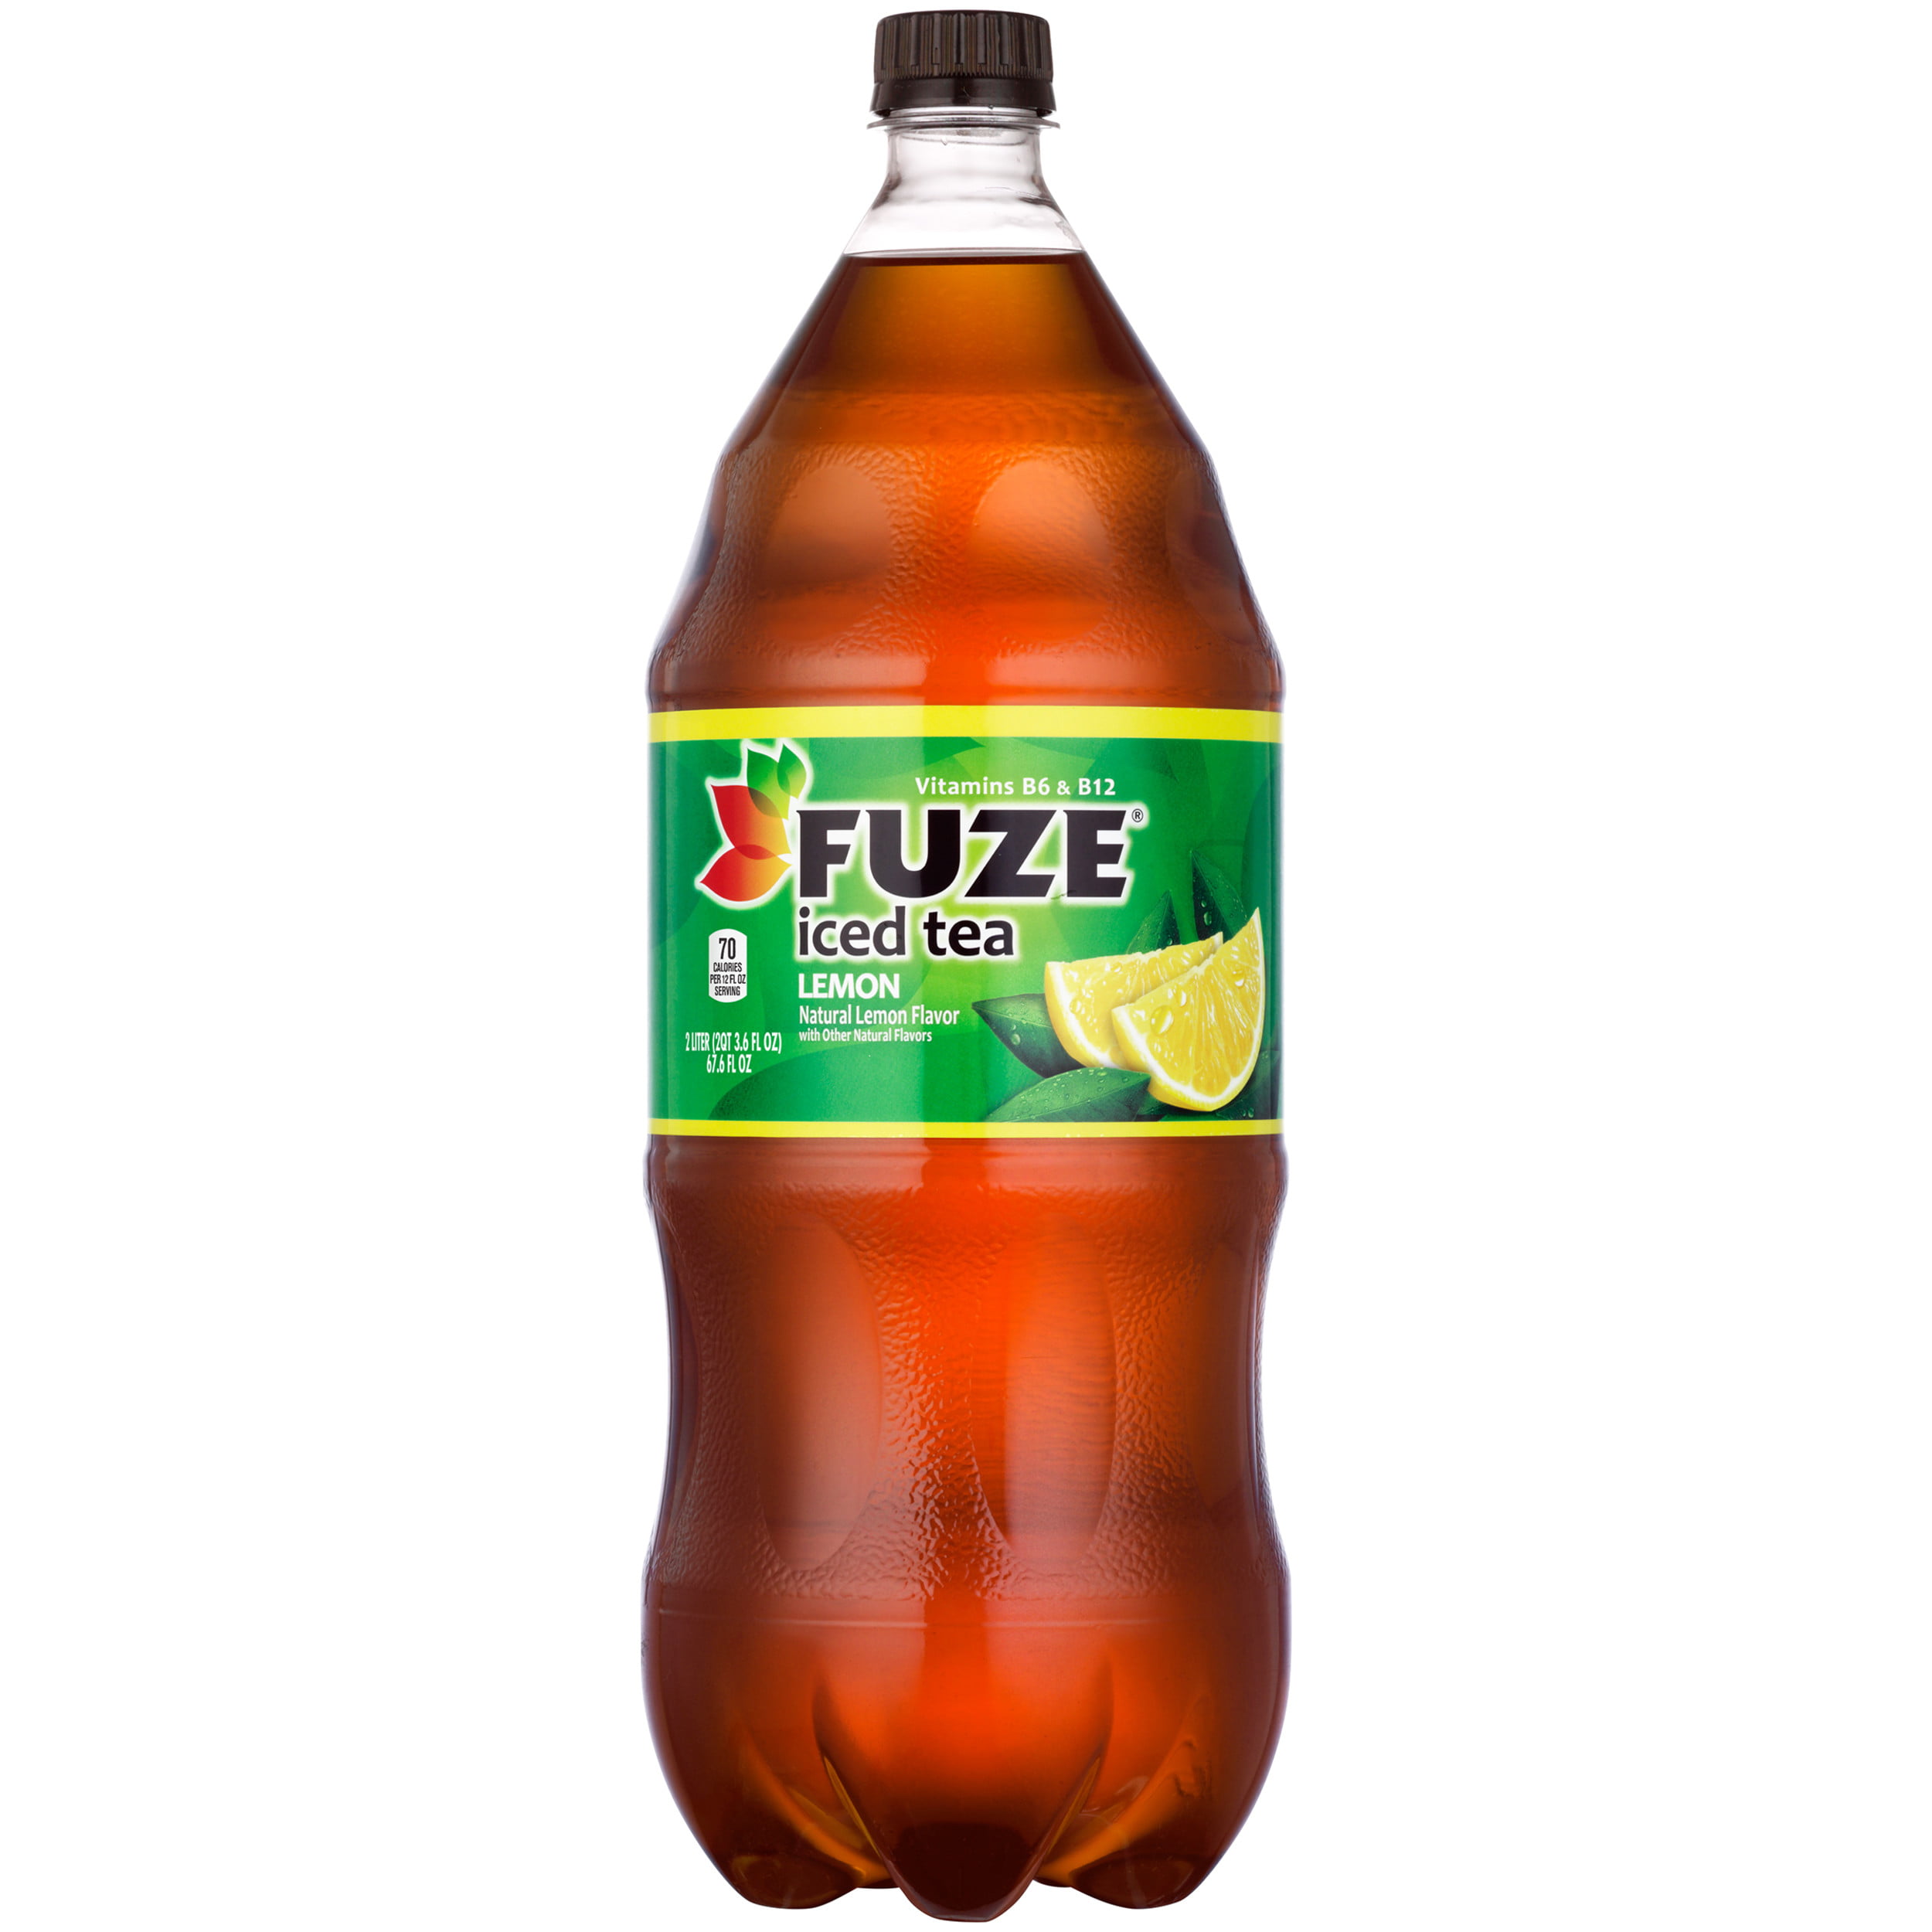 Fuze Iced Tea Lemon Bottle with Vitamins B6 and B12, 2 Liters